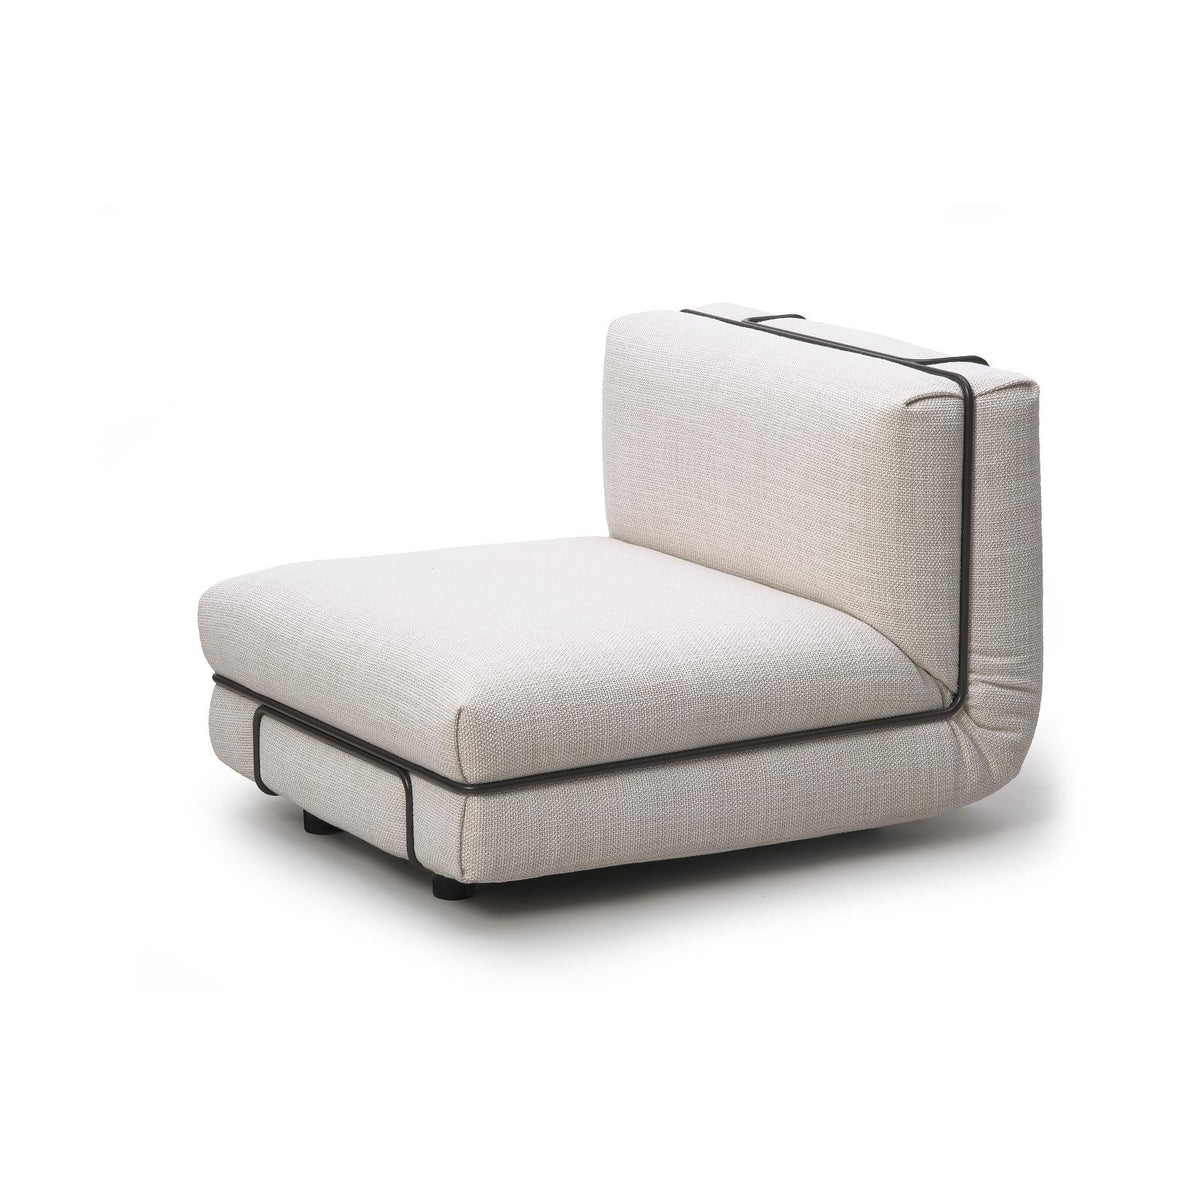 GB Lounge chair by Karakter